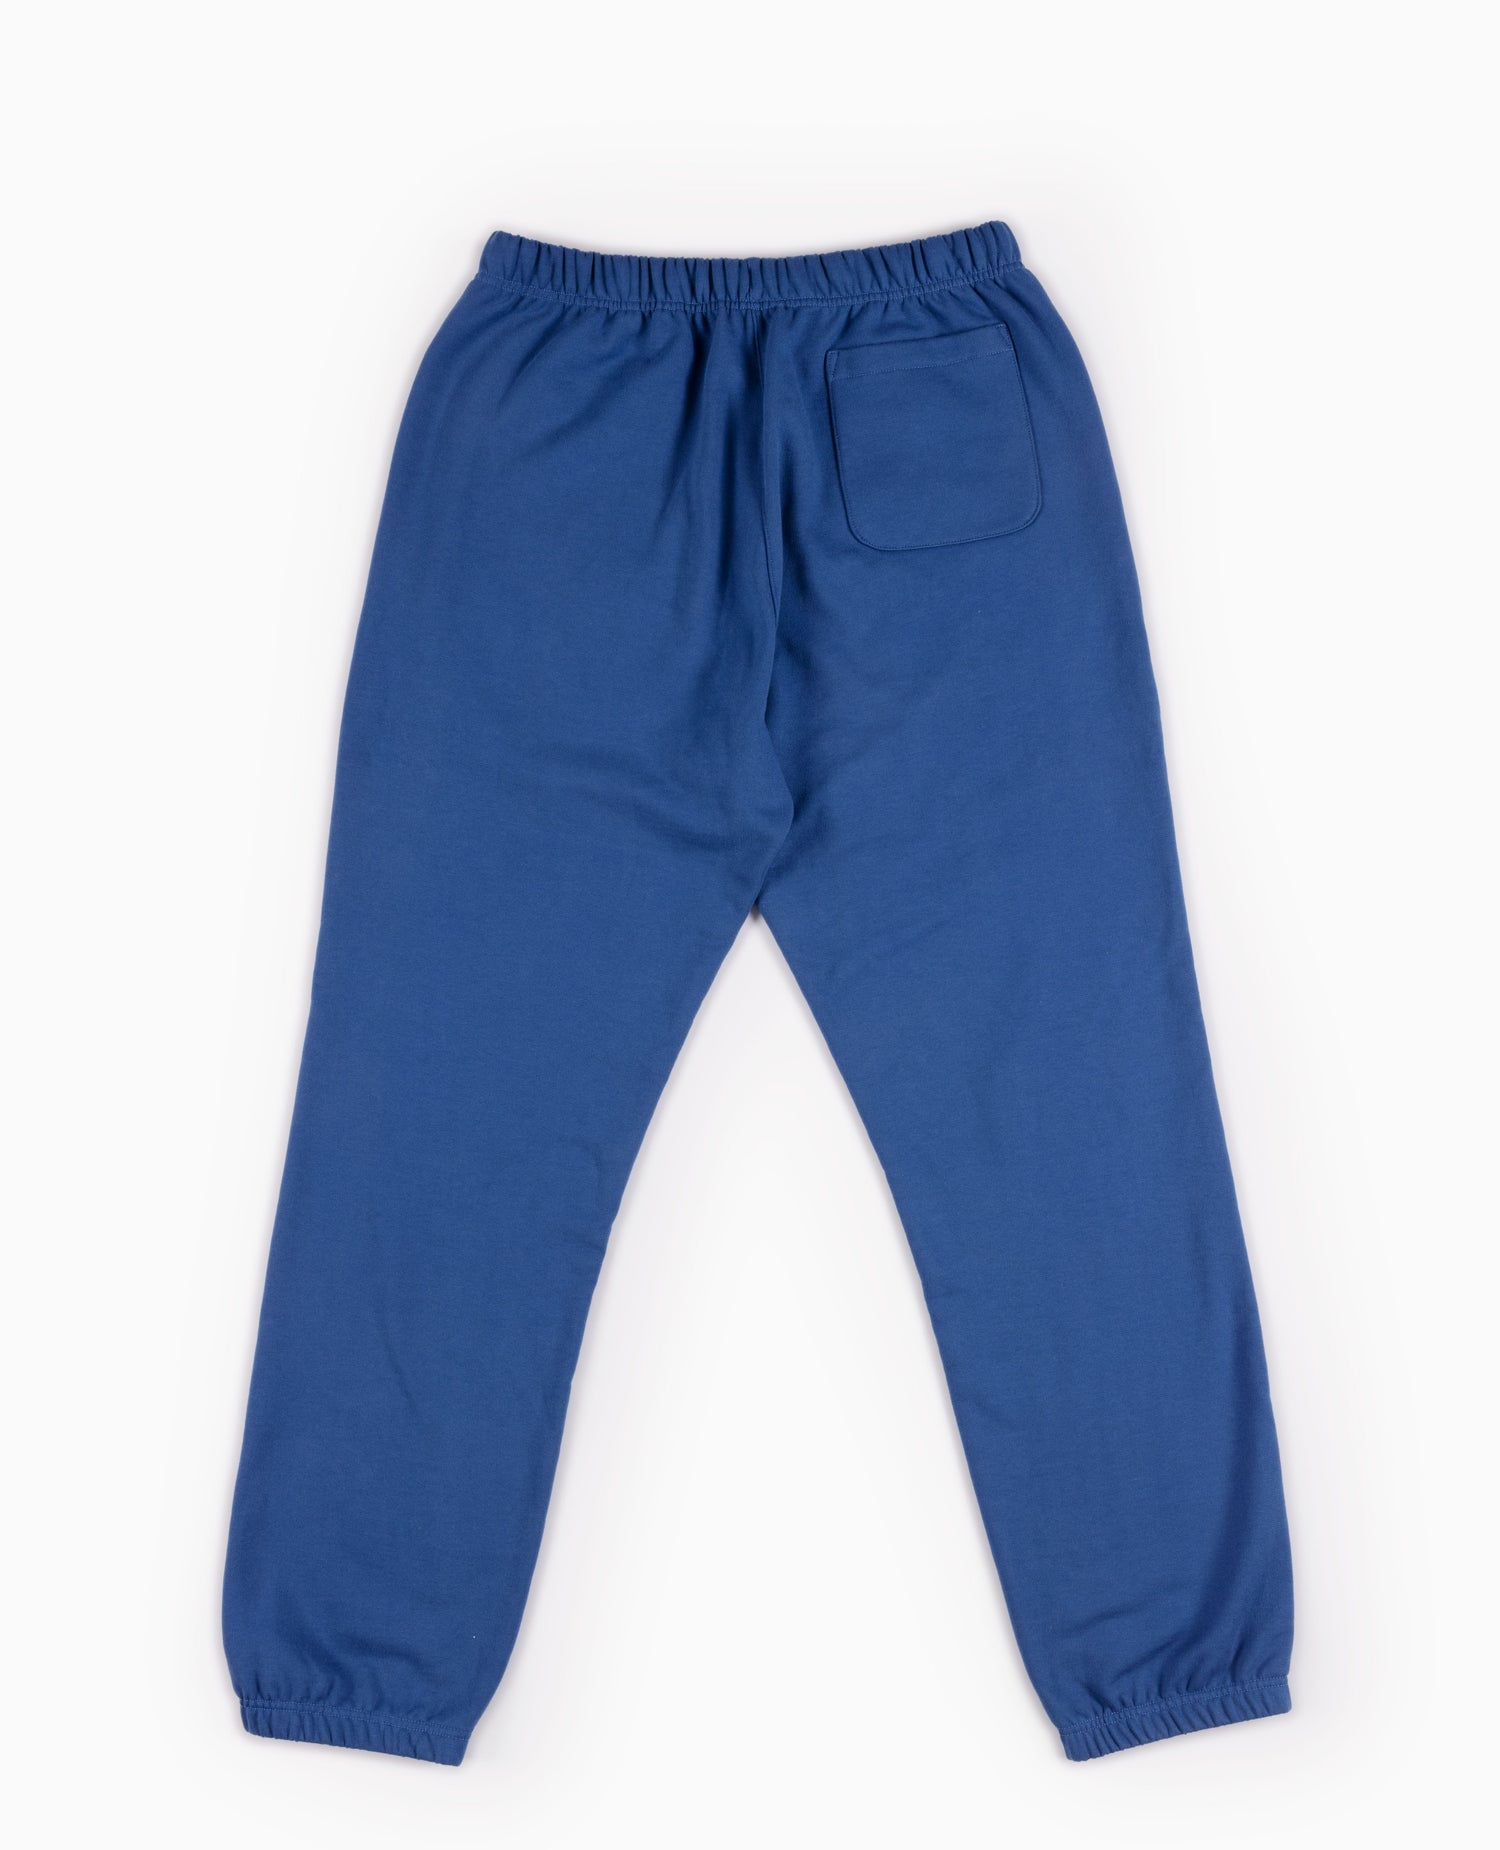 Patta Basic Jogging Pants (Monaco Blue)